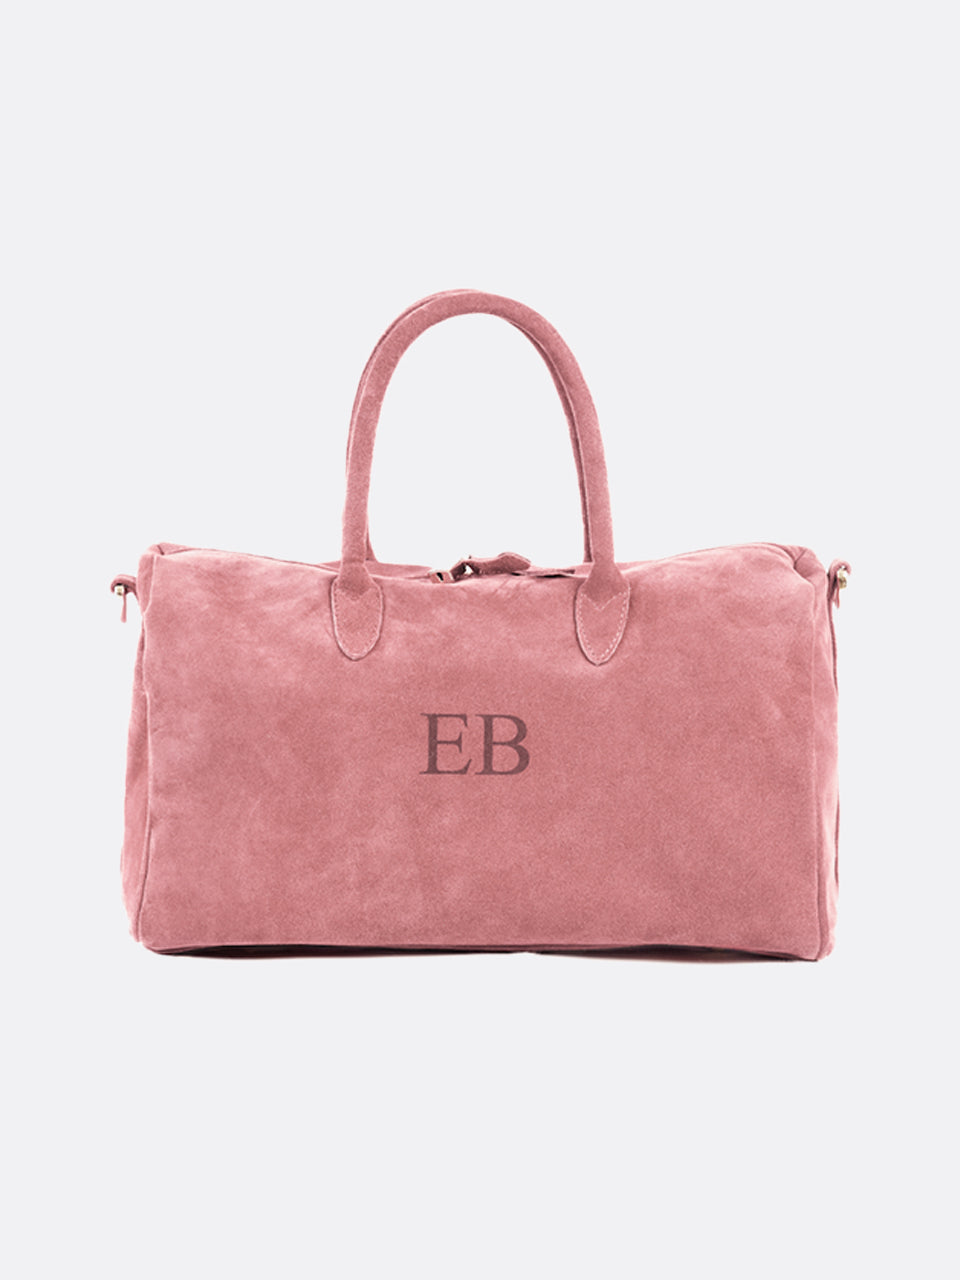 Italian Large Suede Leather Handbag - Dusky Pink - 18